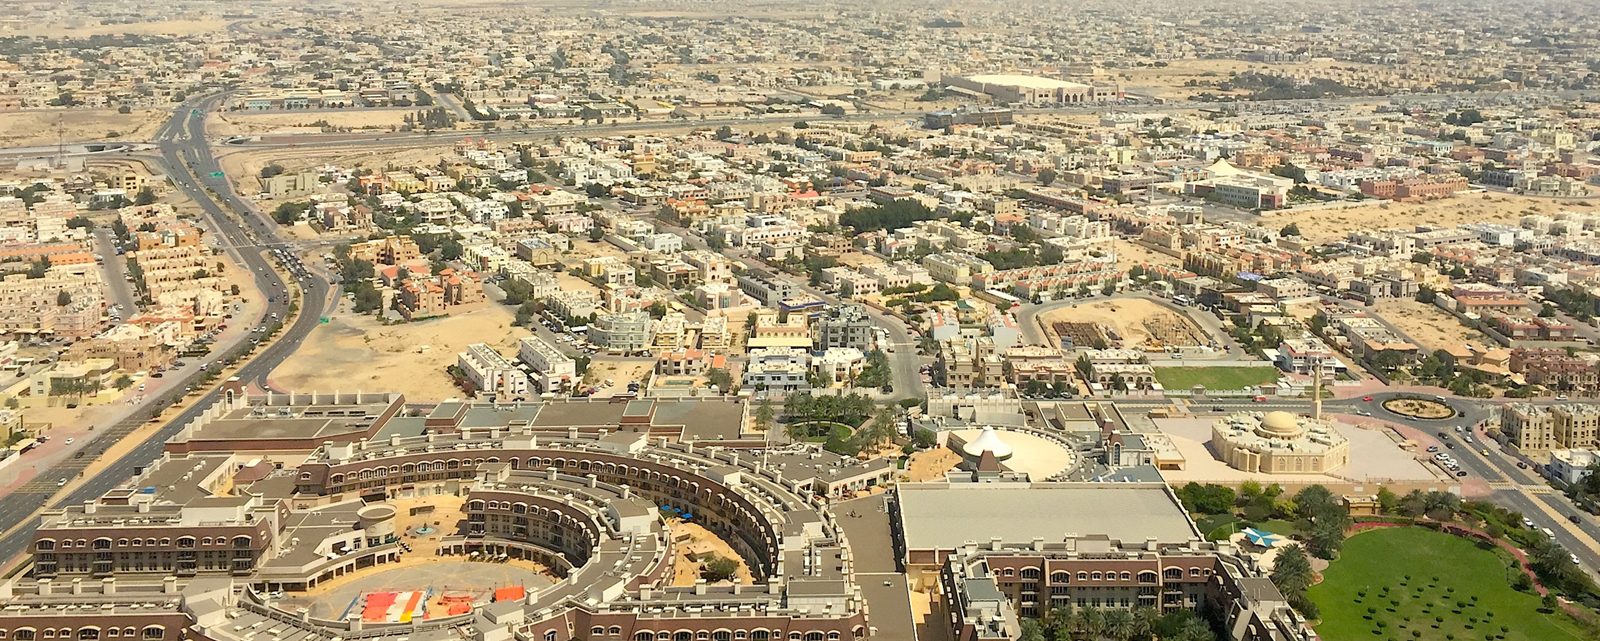 Suburban Sprawl,Dubai, United Arab Emirates